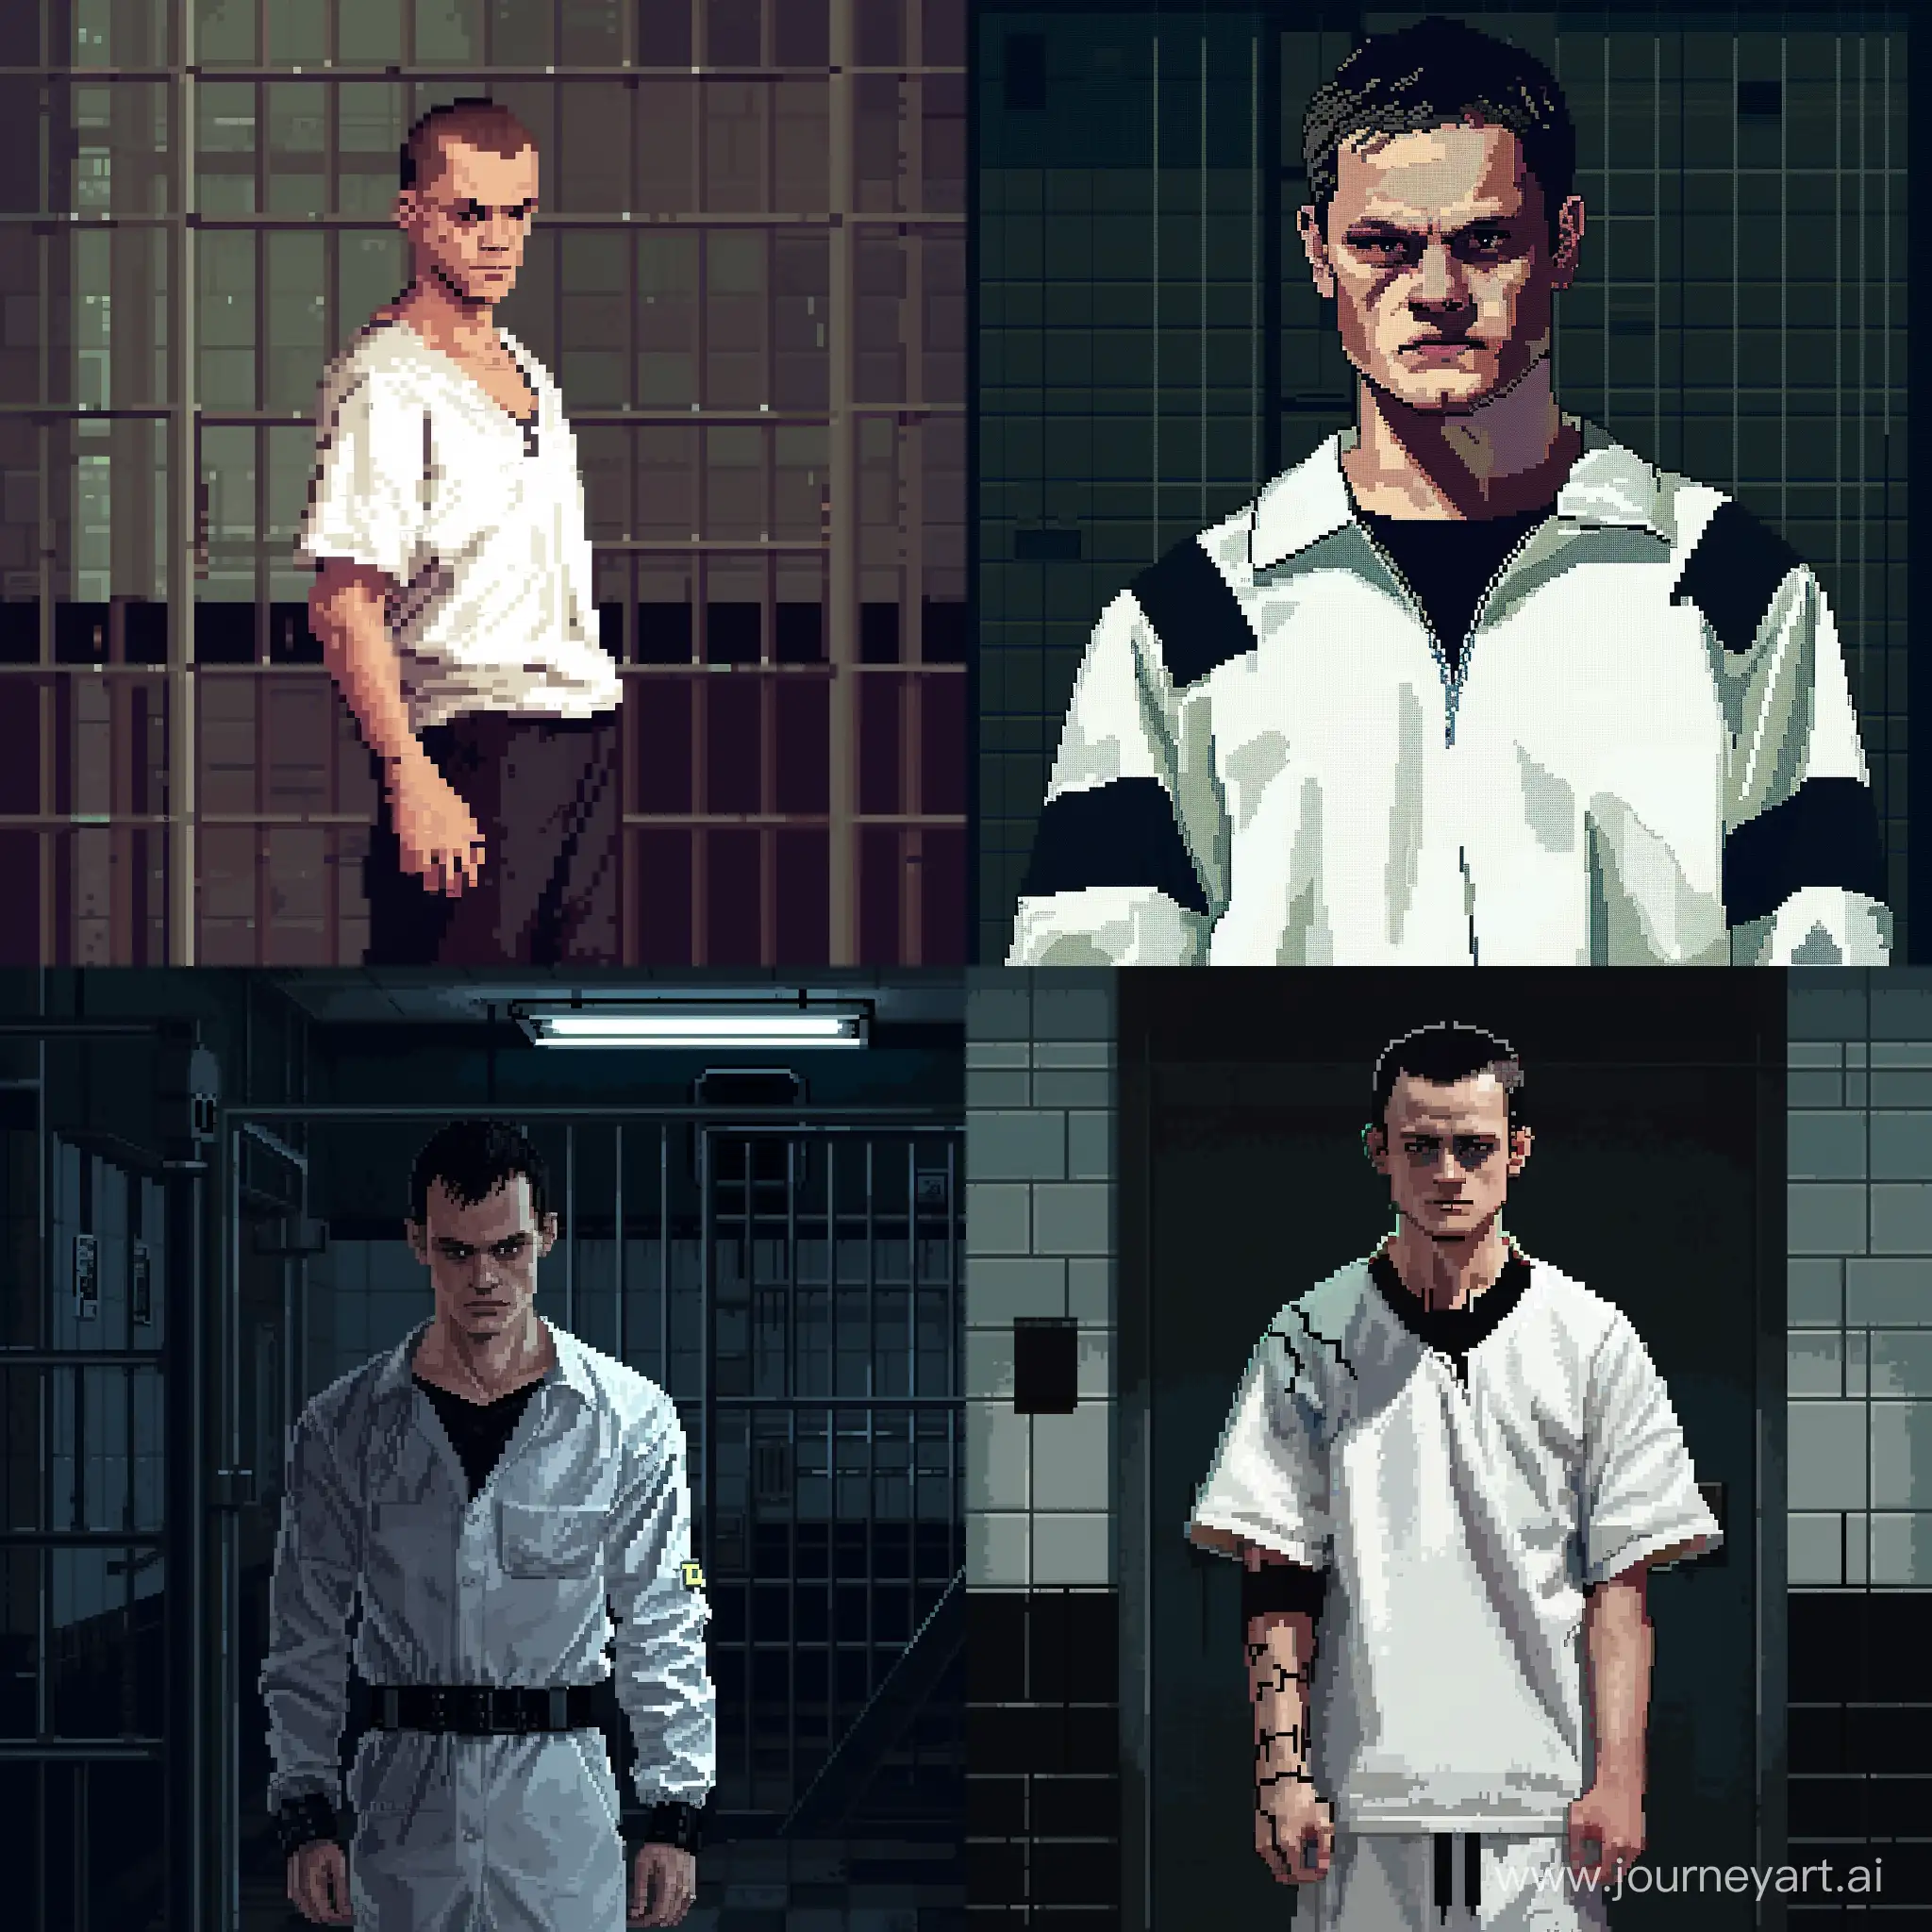 Pixel-Art-Captured-Villain-Vitalik-Buterin-in-Monochrome-Prison-Attire